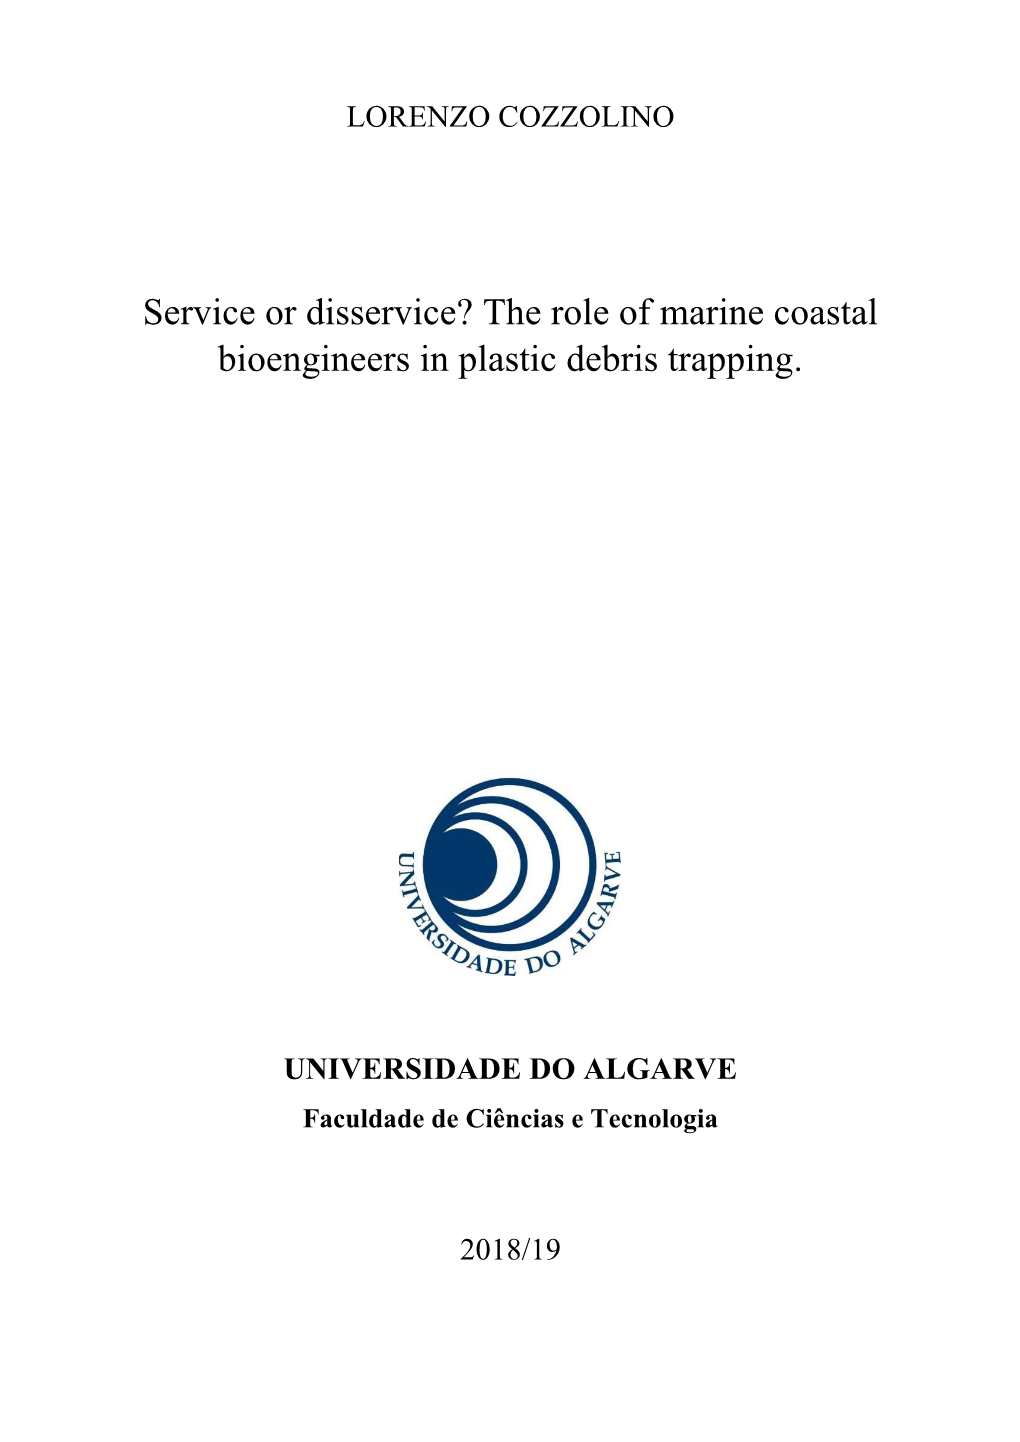 The Role of Marine Coastal Bioengineers in Plastic Debris Trapping